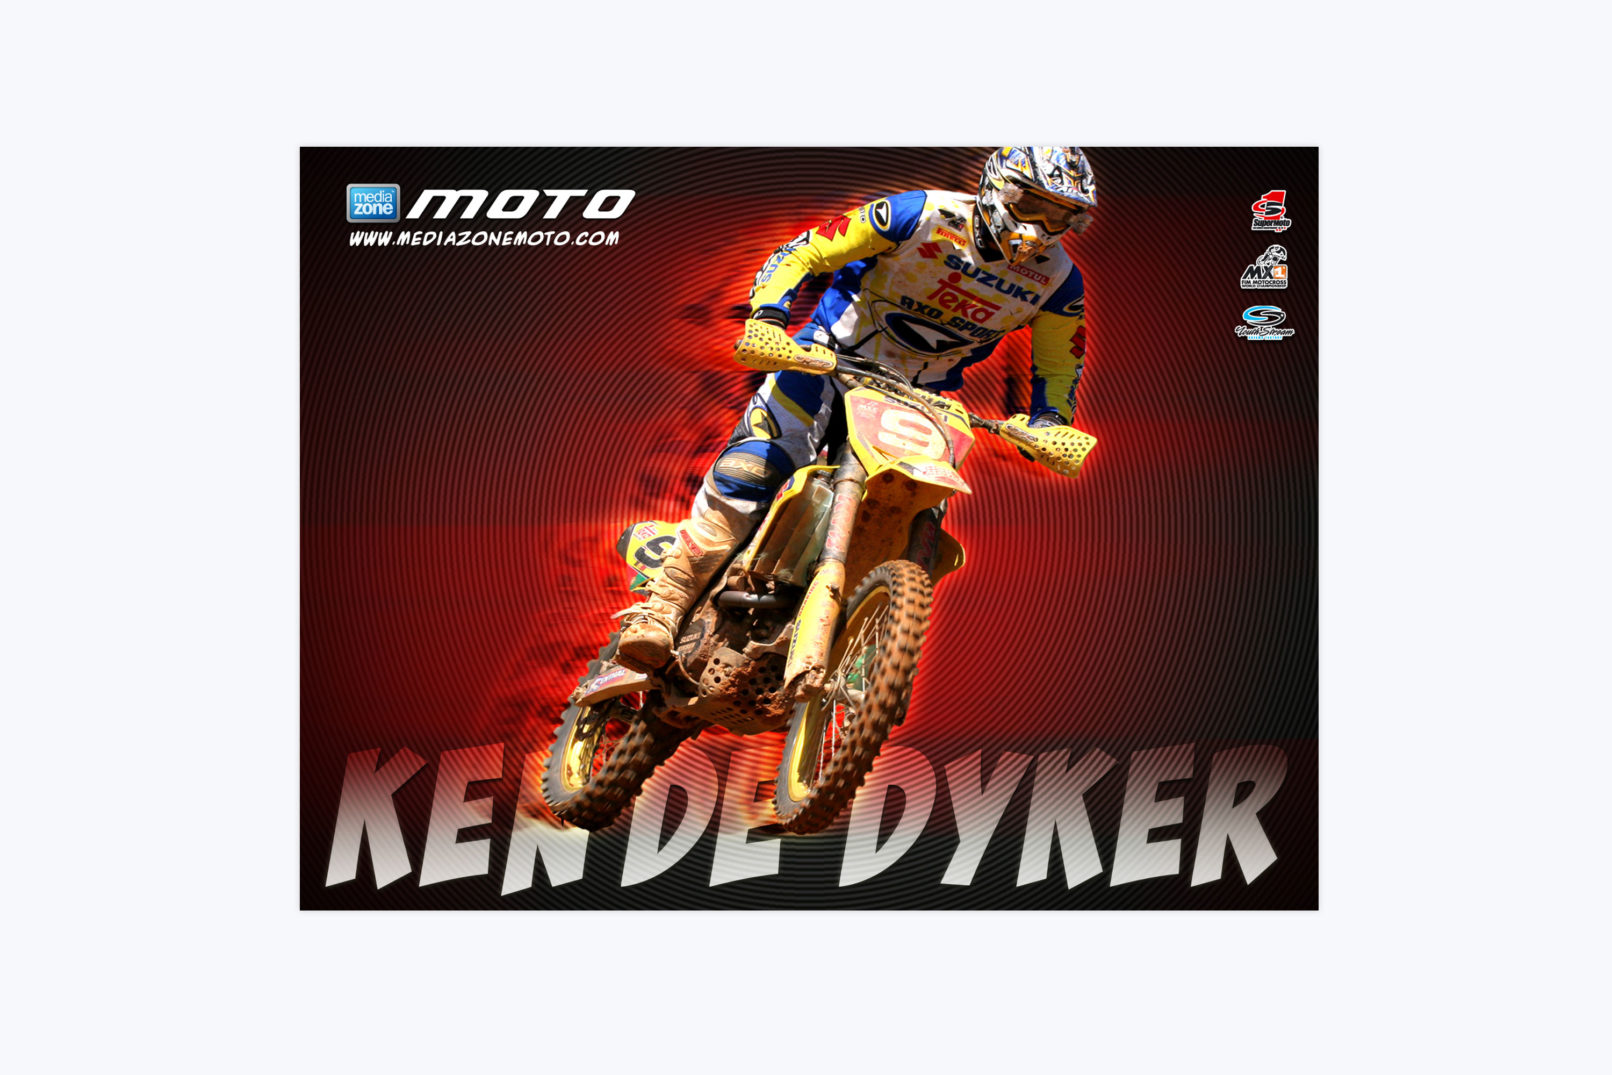 media zone motocross poster design